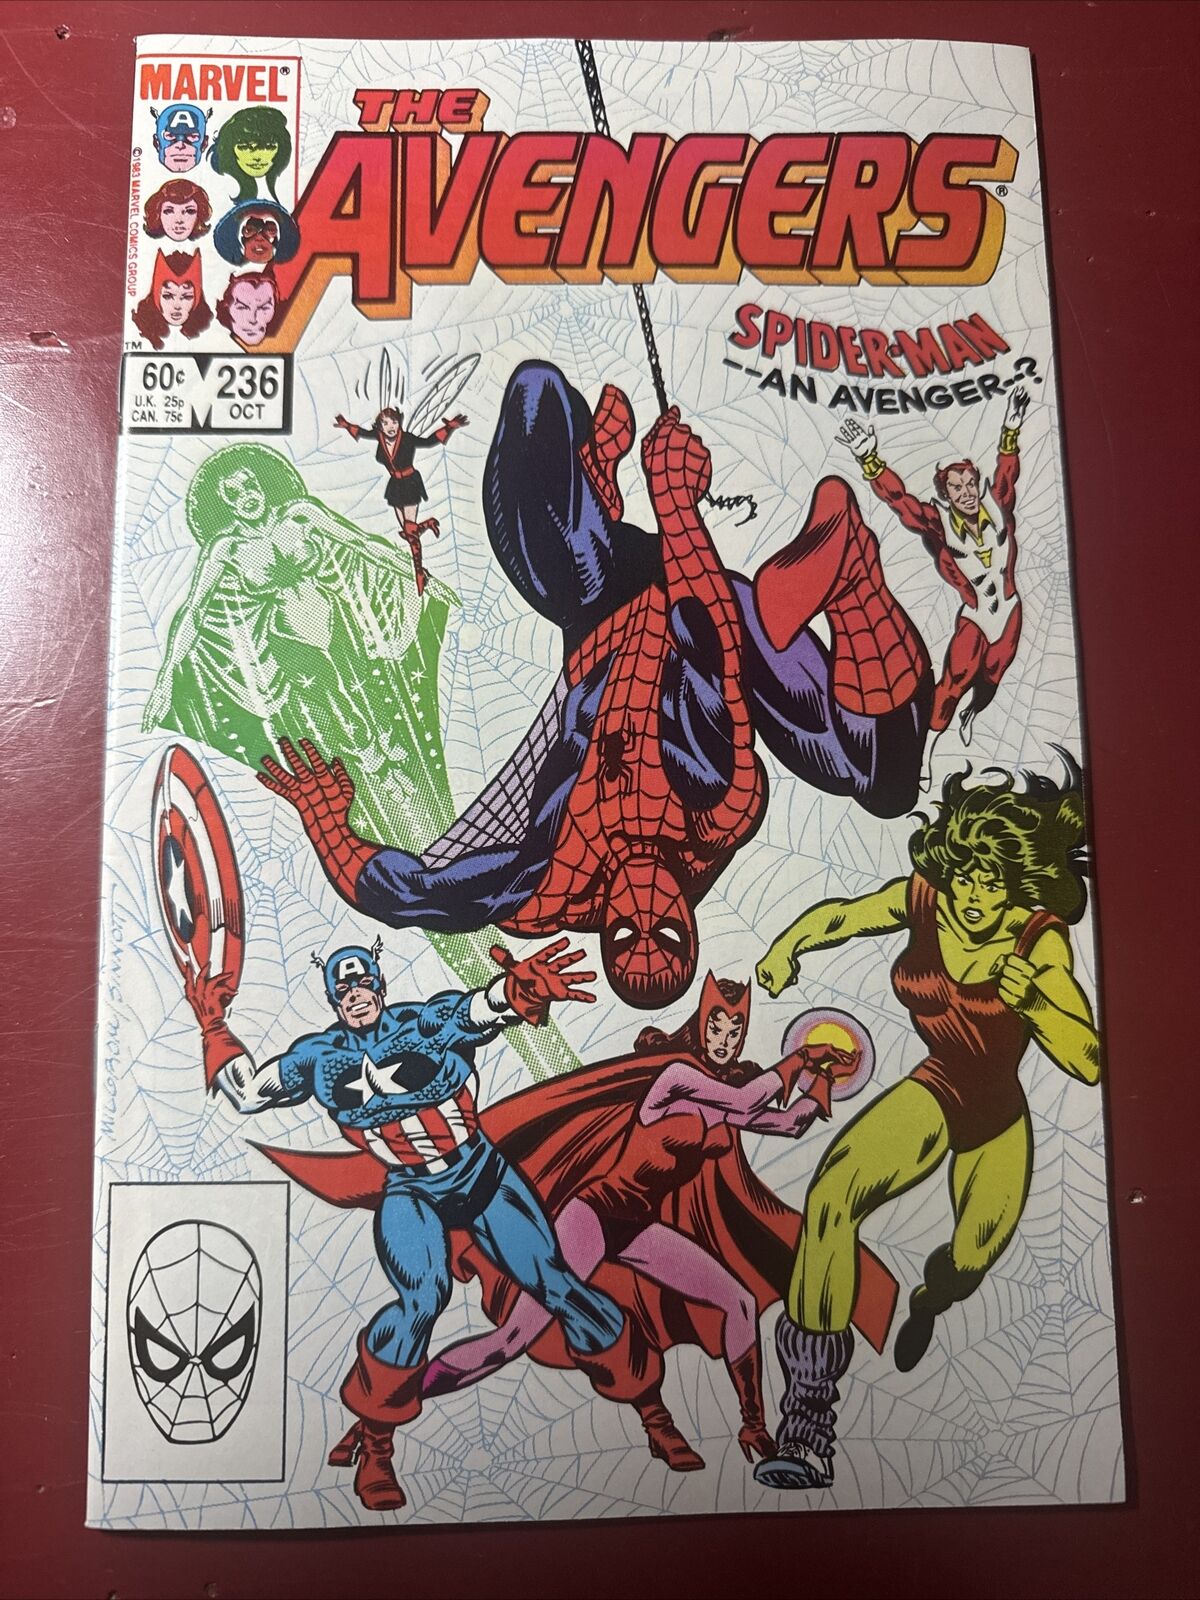 Avengers #236: “I Want To Be An Avenger” Spider-man, Marvel 1983 NM-